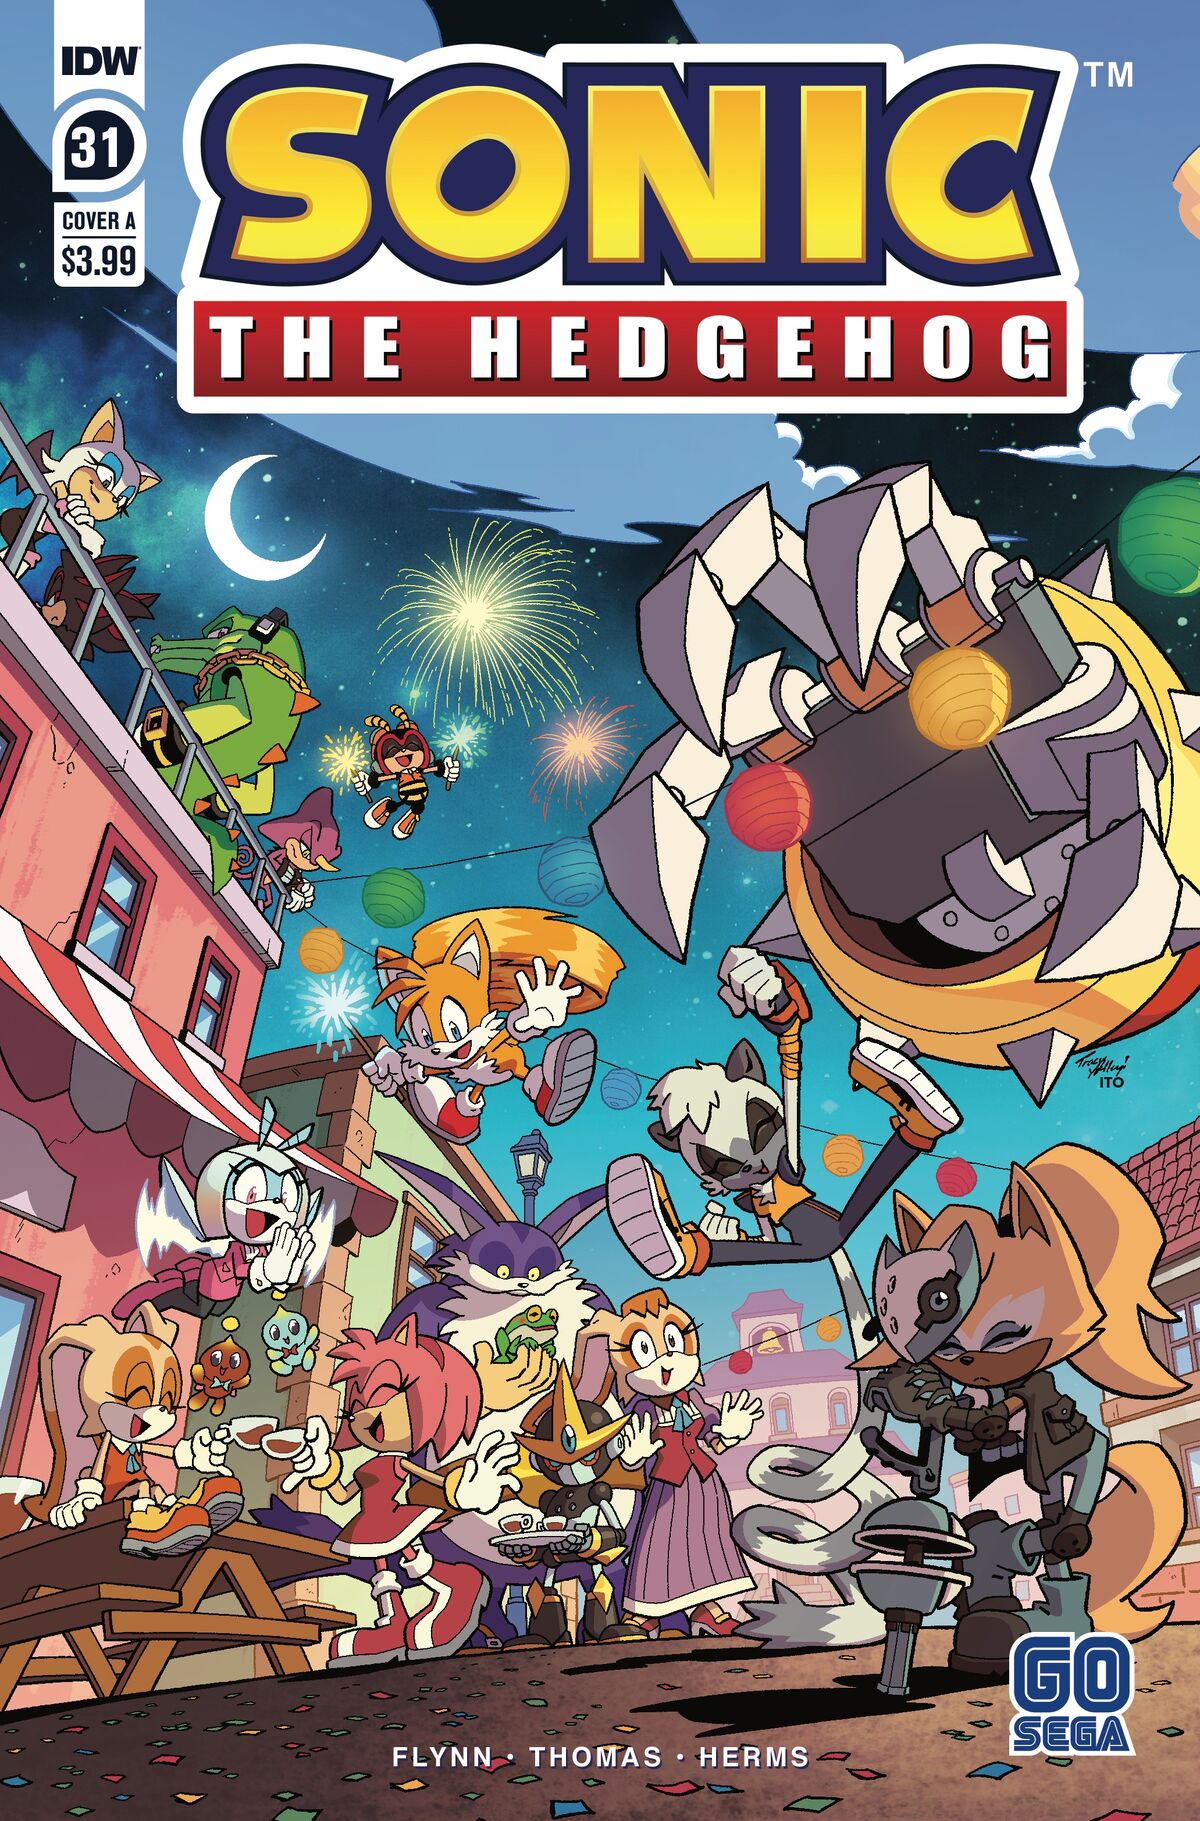 Sonic the Hedgehog Digital Comics on CD Collection. 